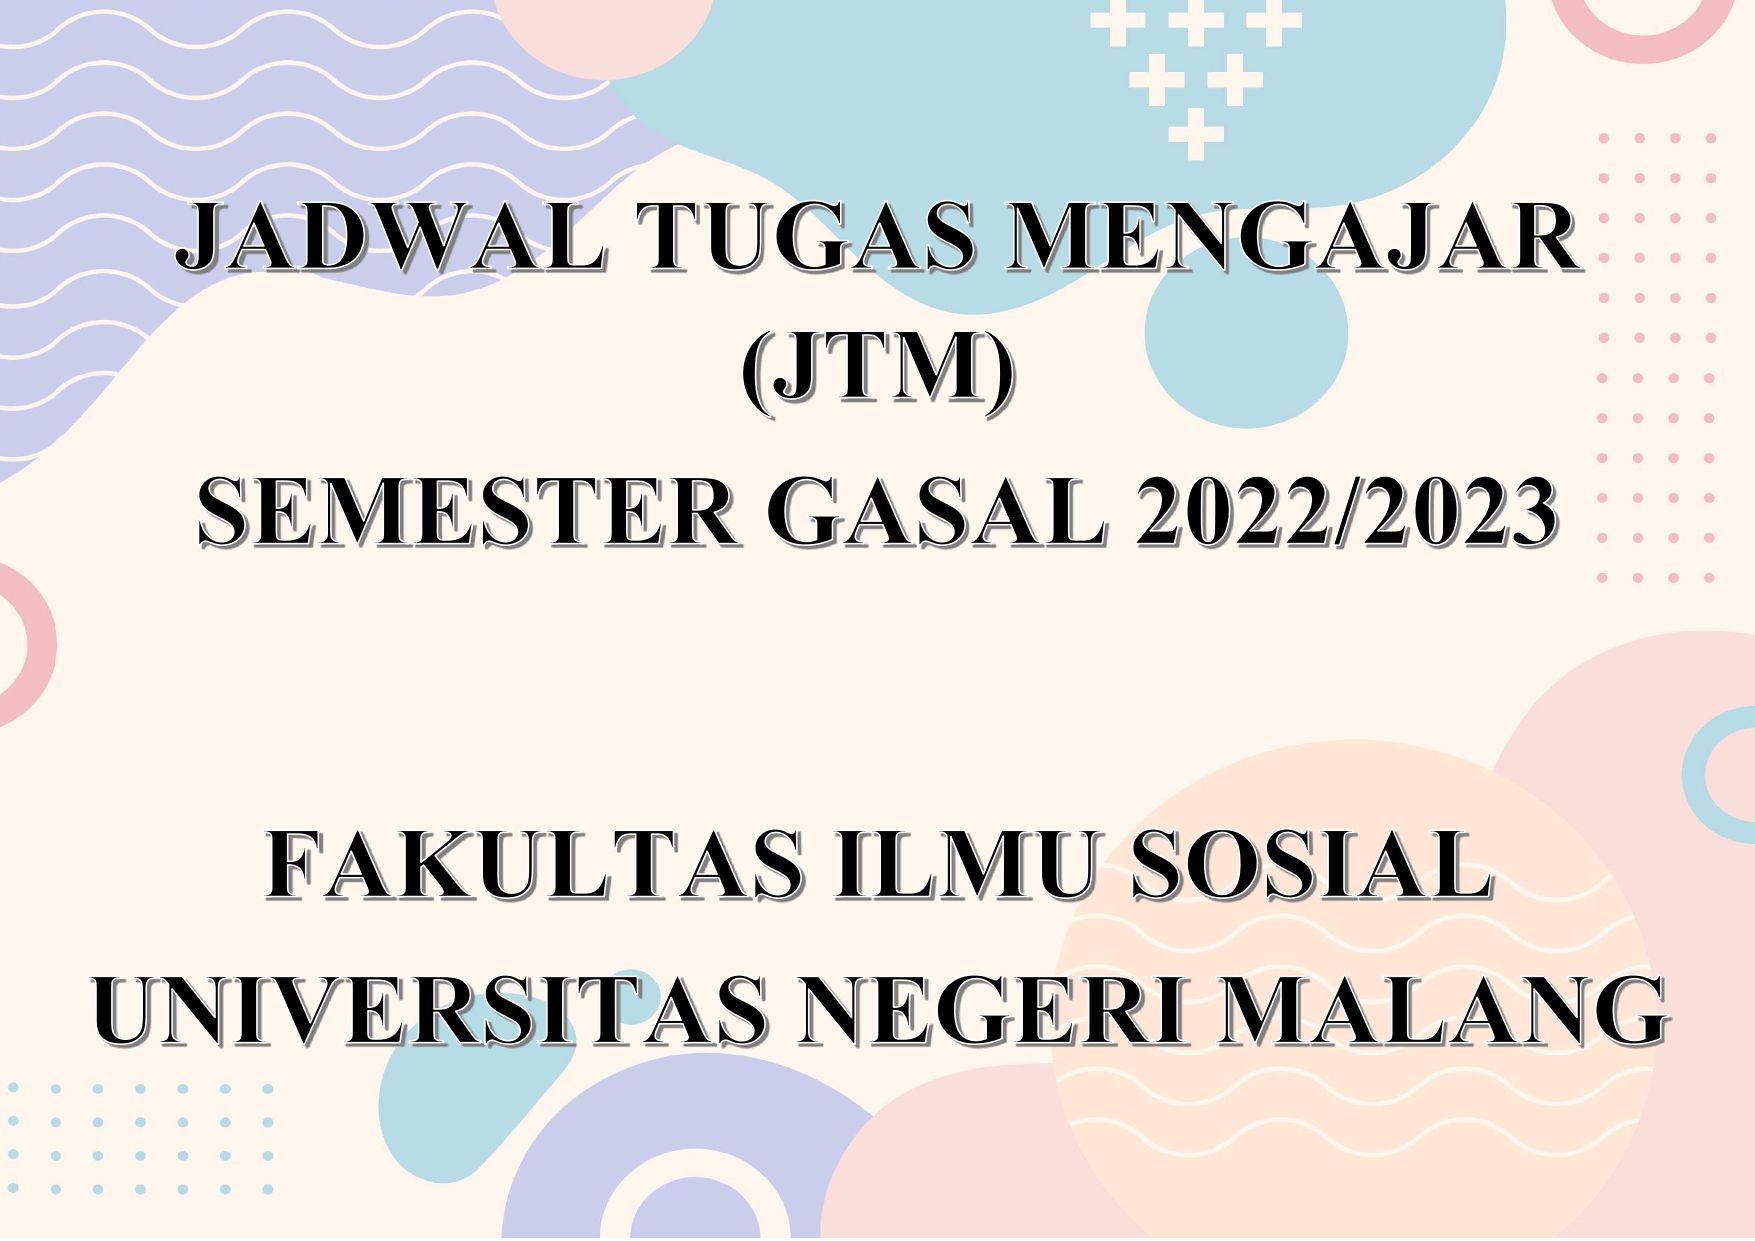 JADWAL TUGAS MENGAJAR (JTM) SEMESTER GASAL 2022/2023